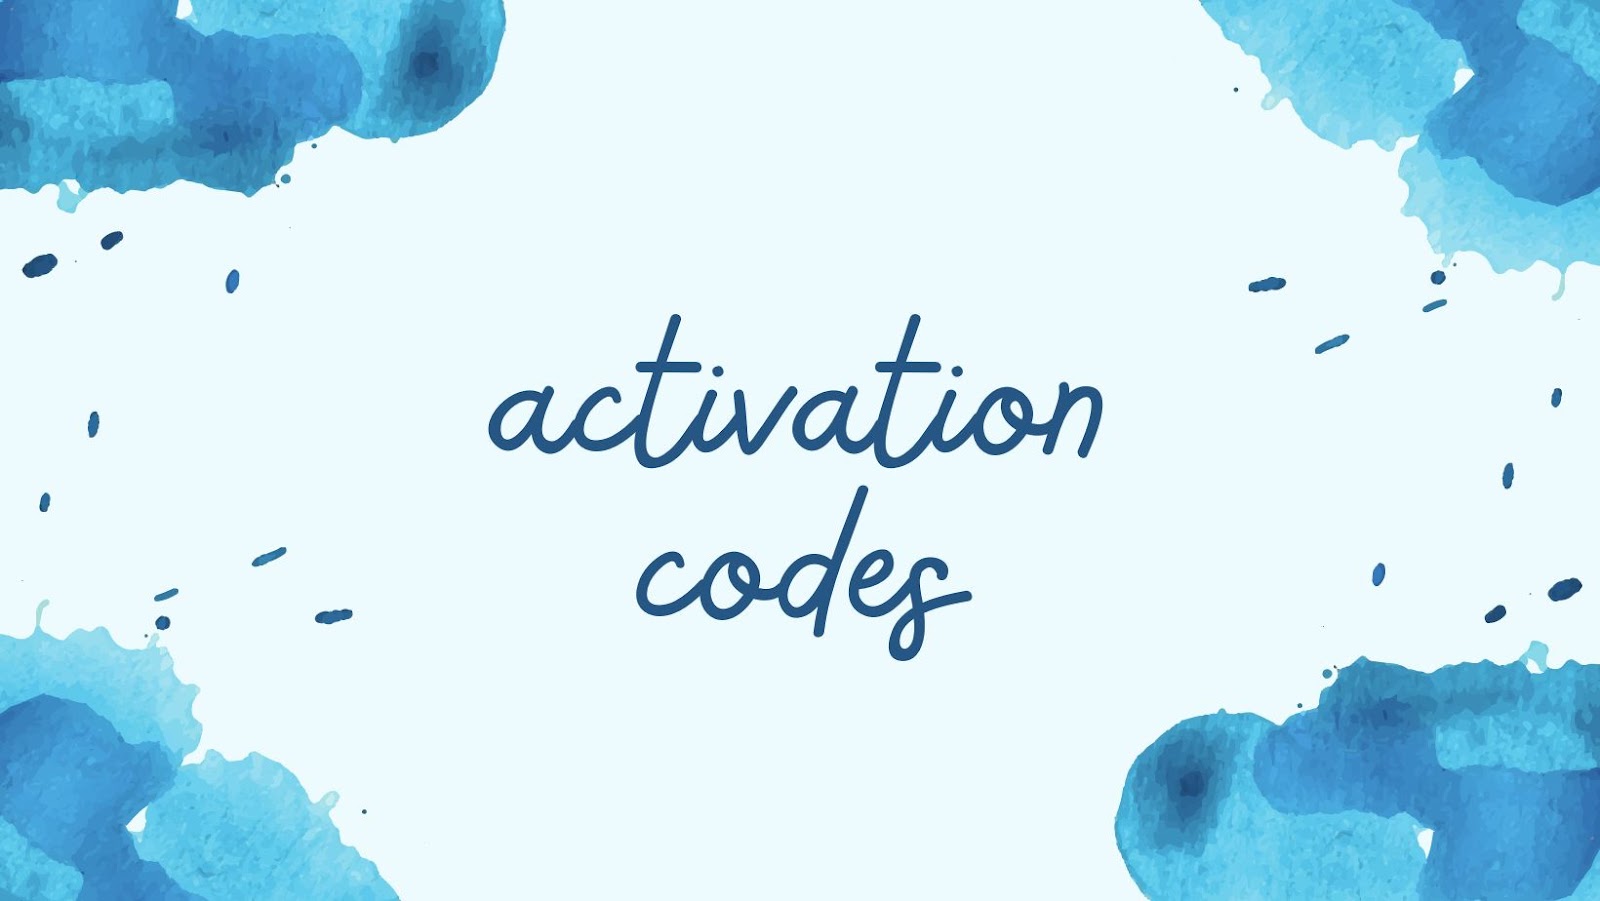 eonline.com/link activation code roku